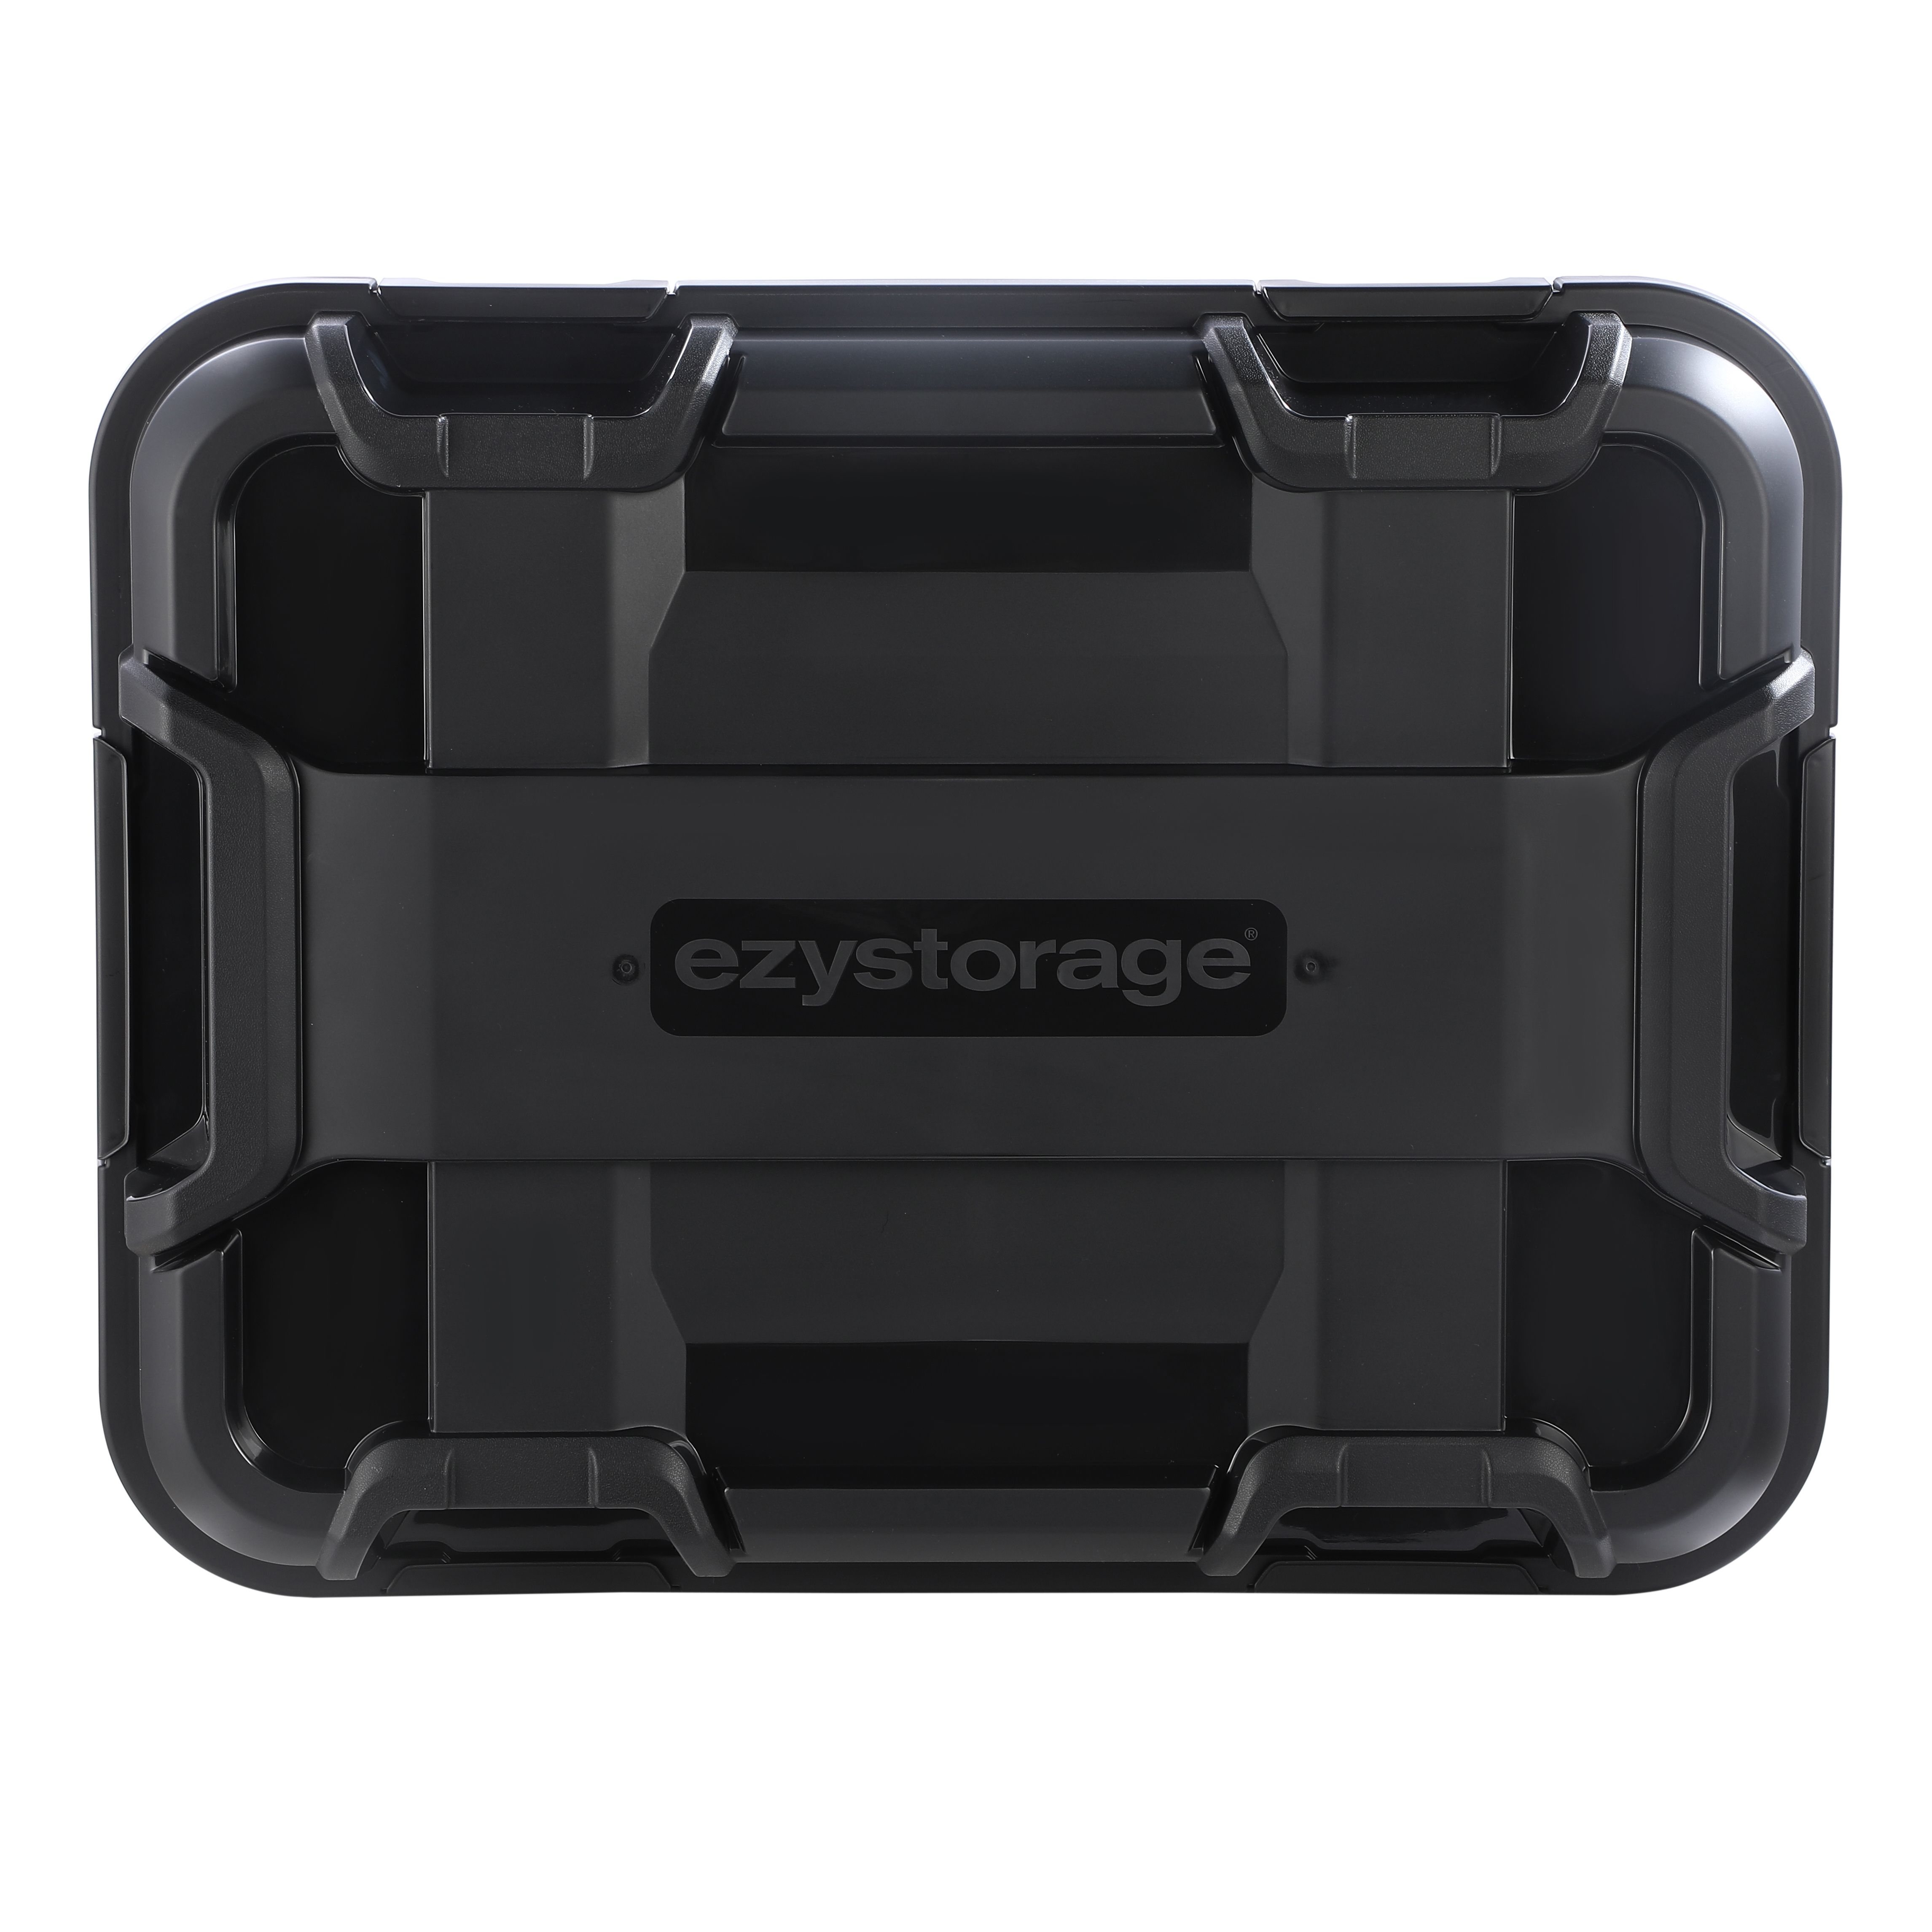 Ezy Storage Bunker tough Black 160L XXL Stackable Wheeled Storage box with Lid